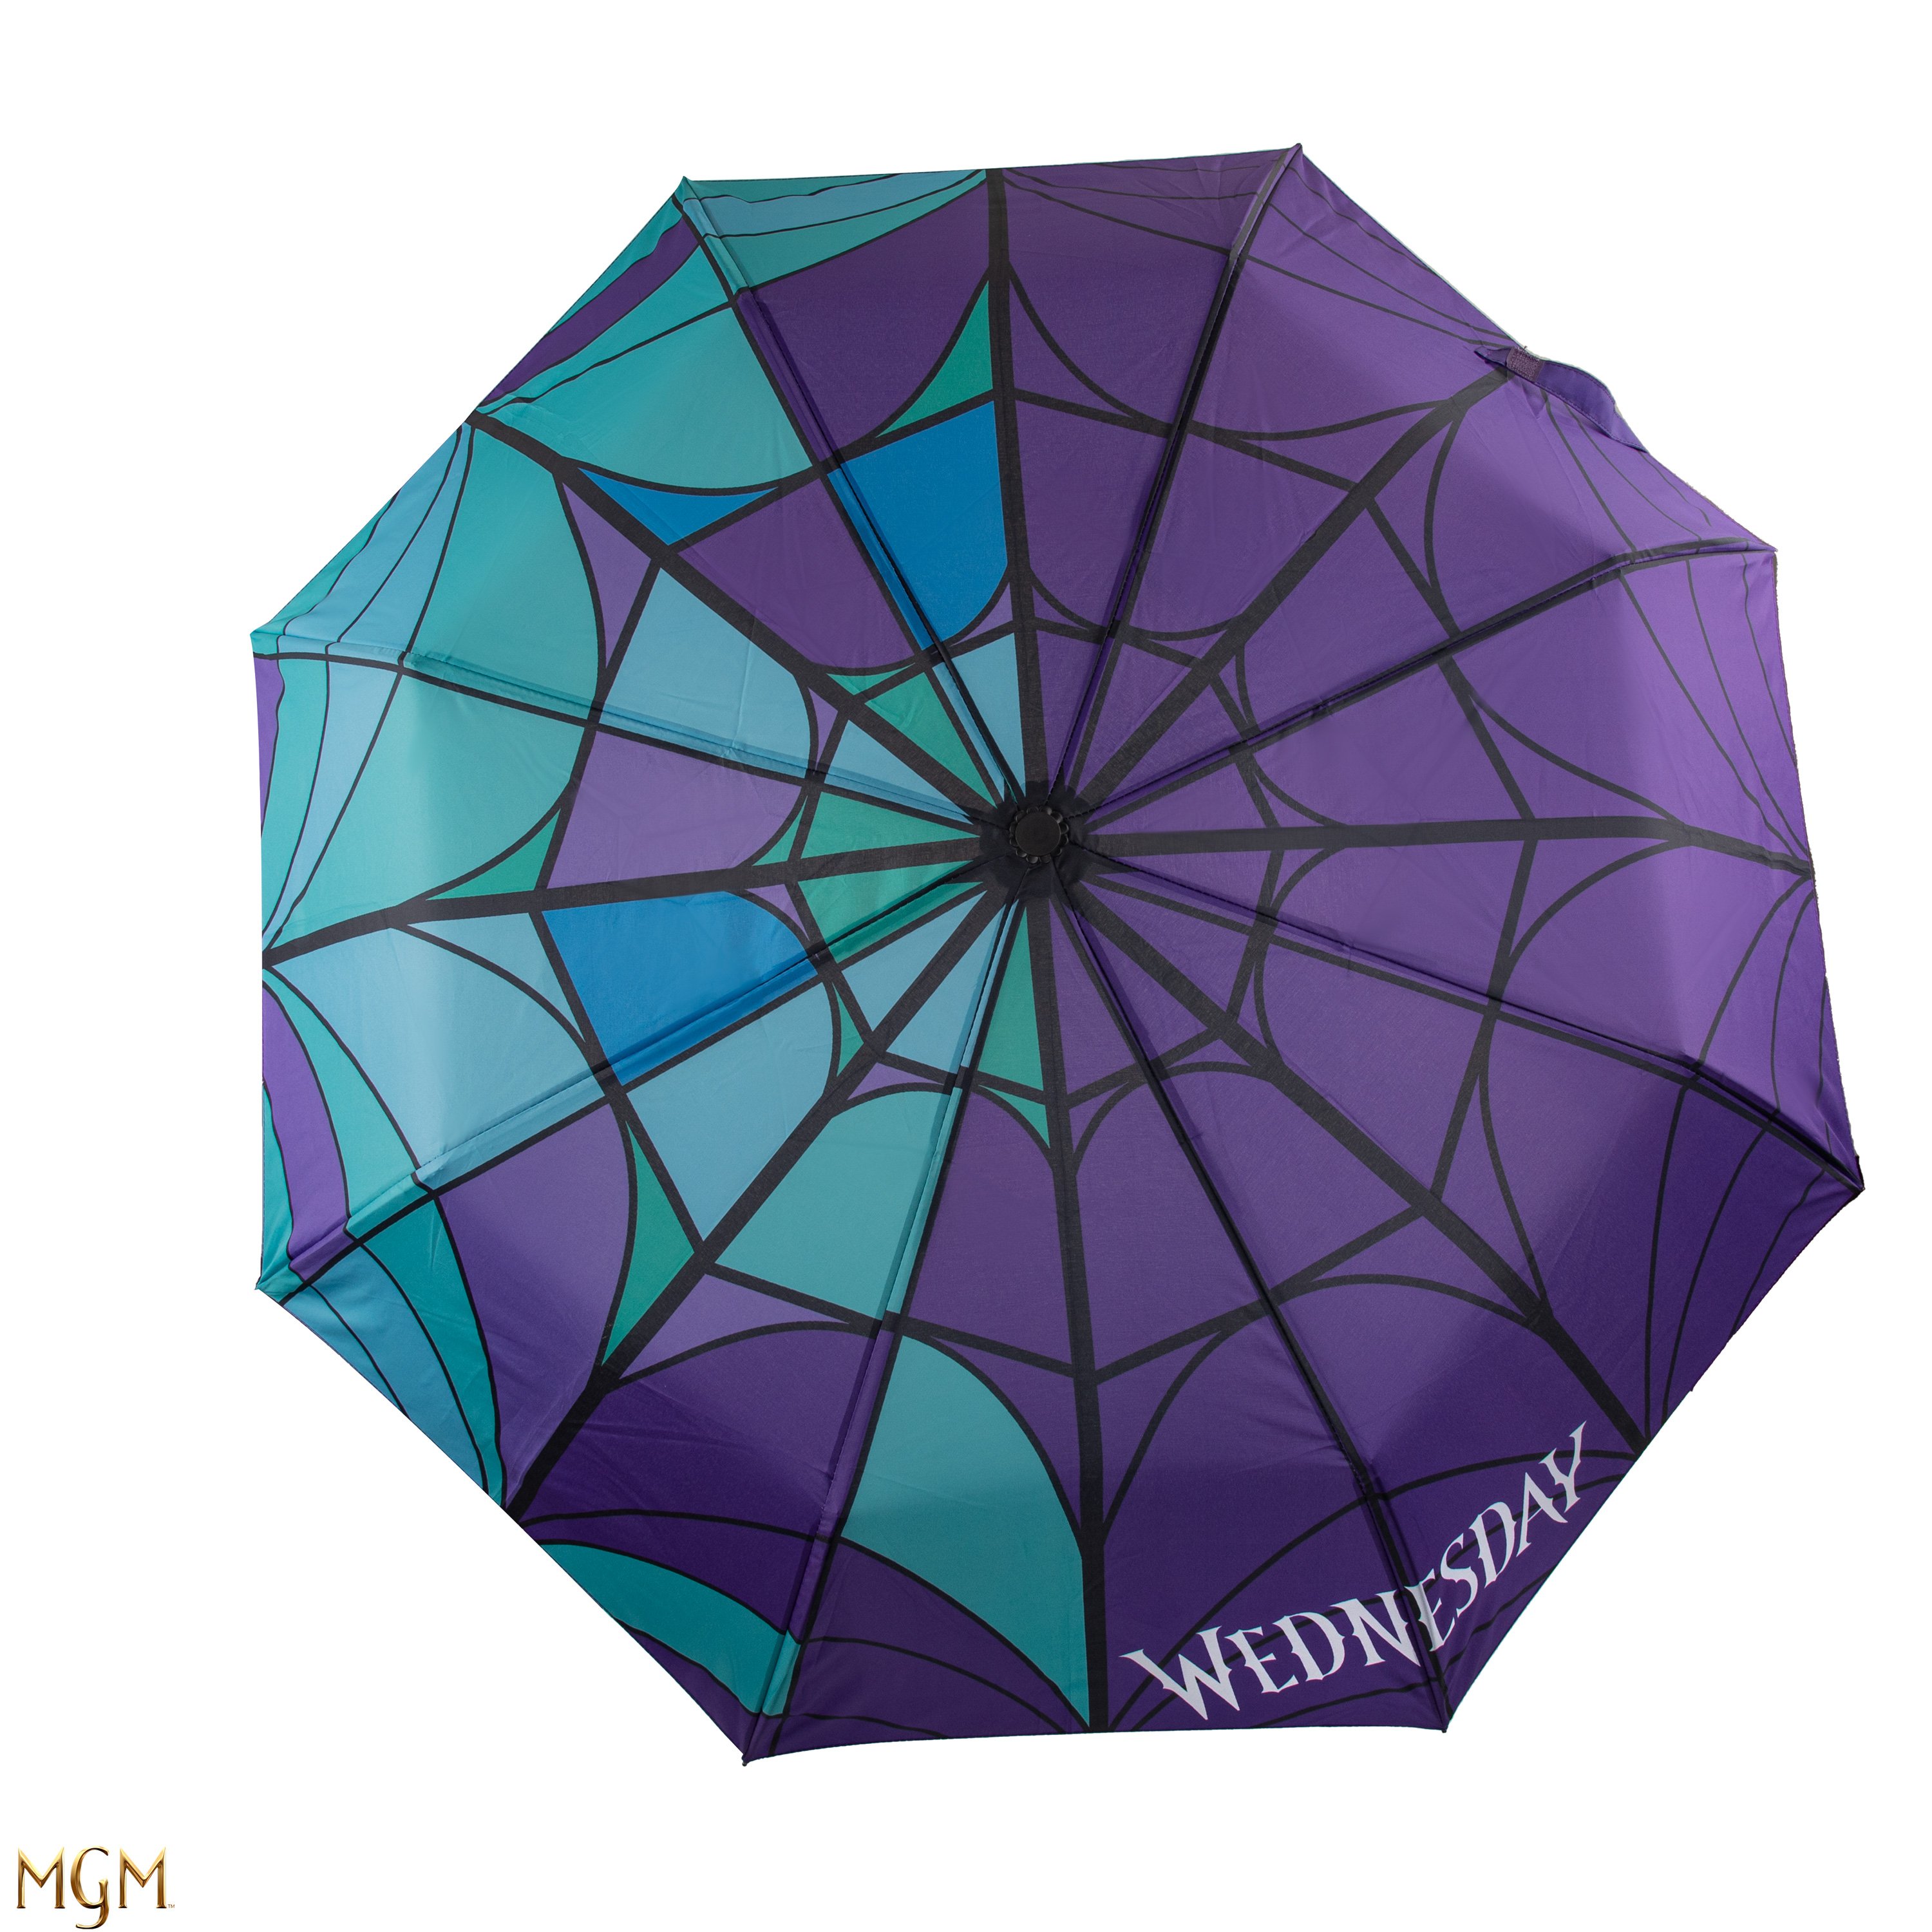 Wednesday - Umbrella - Wednesday Stained glass